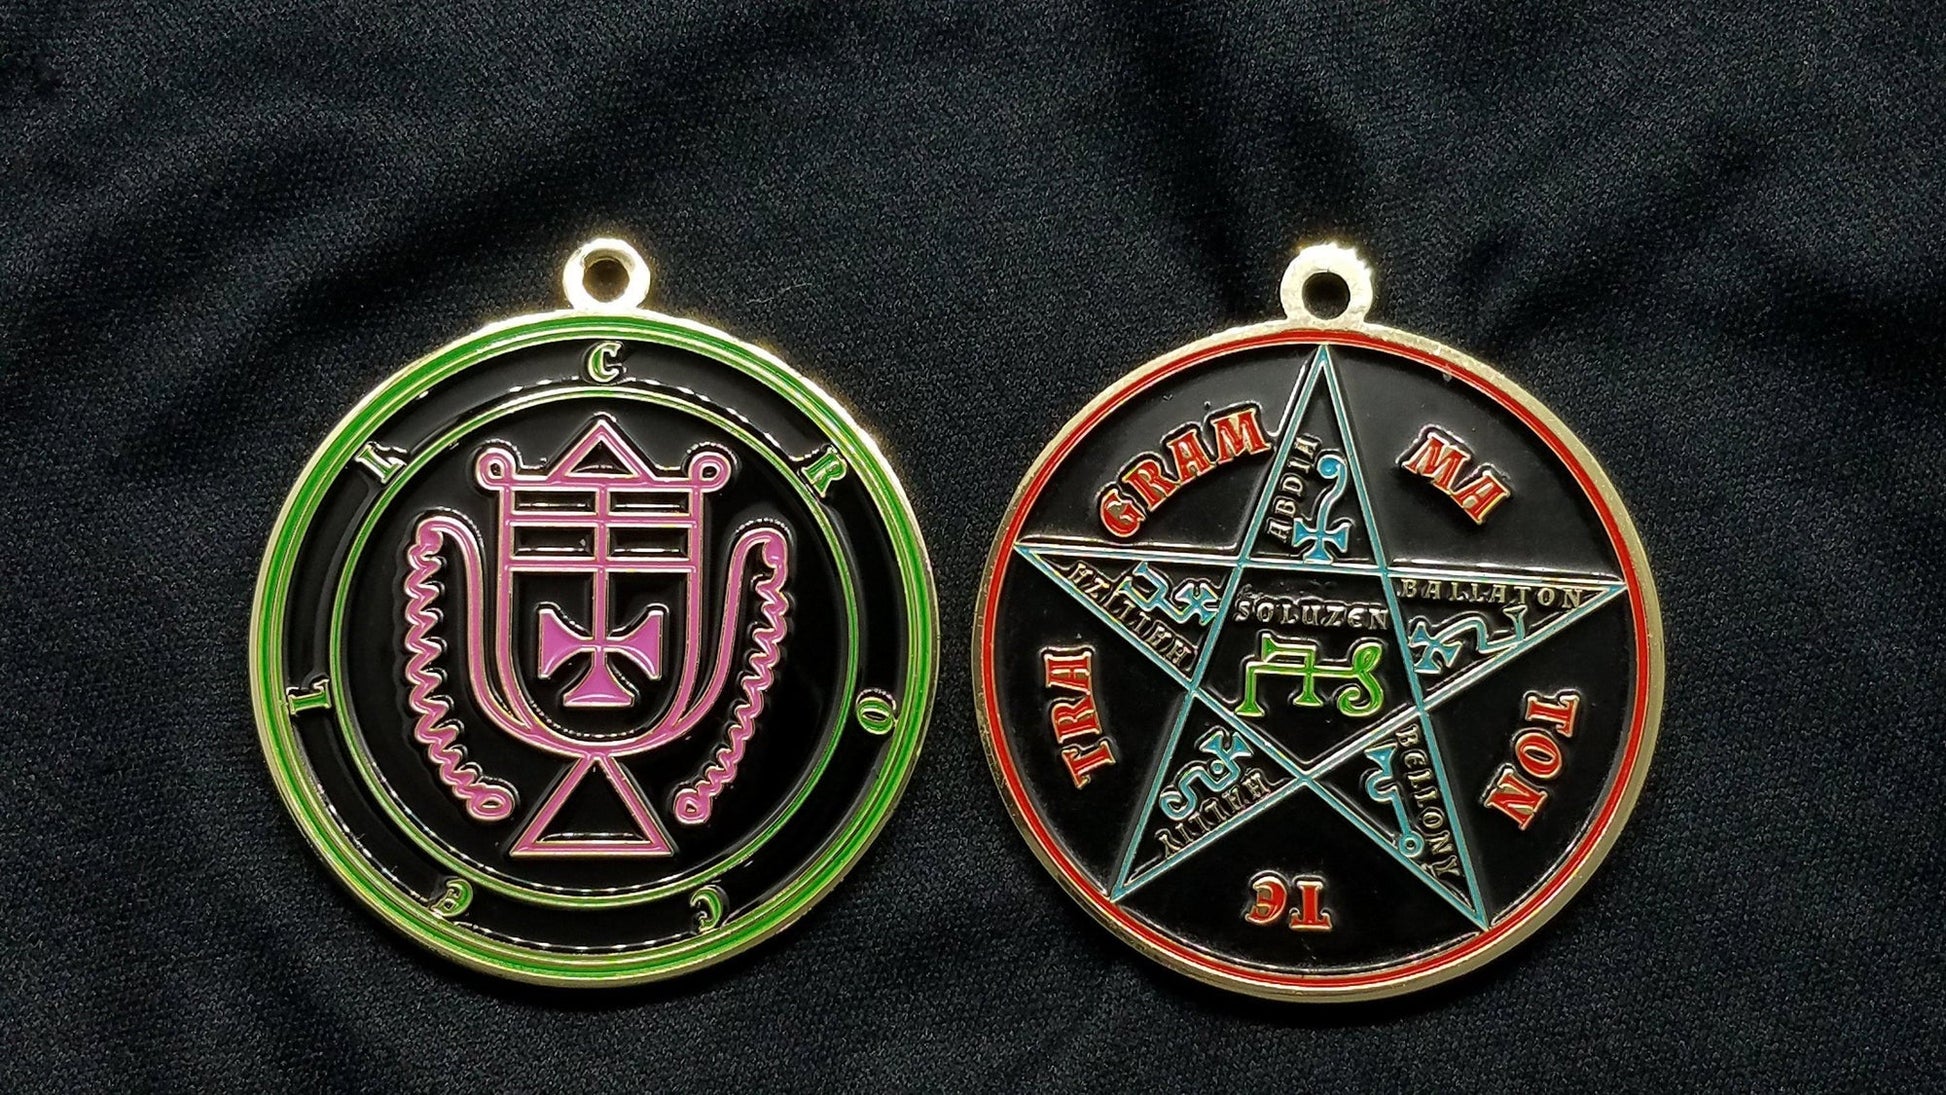 Crocell talisman with pentagram of solomon on back